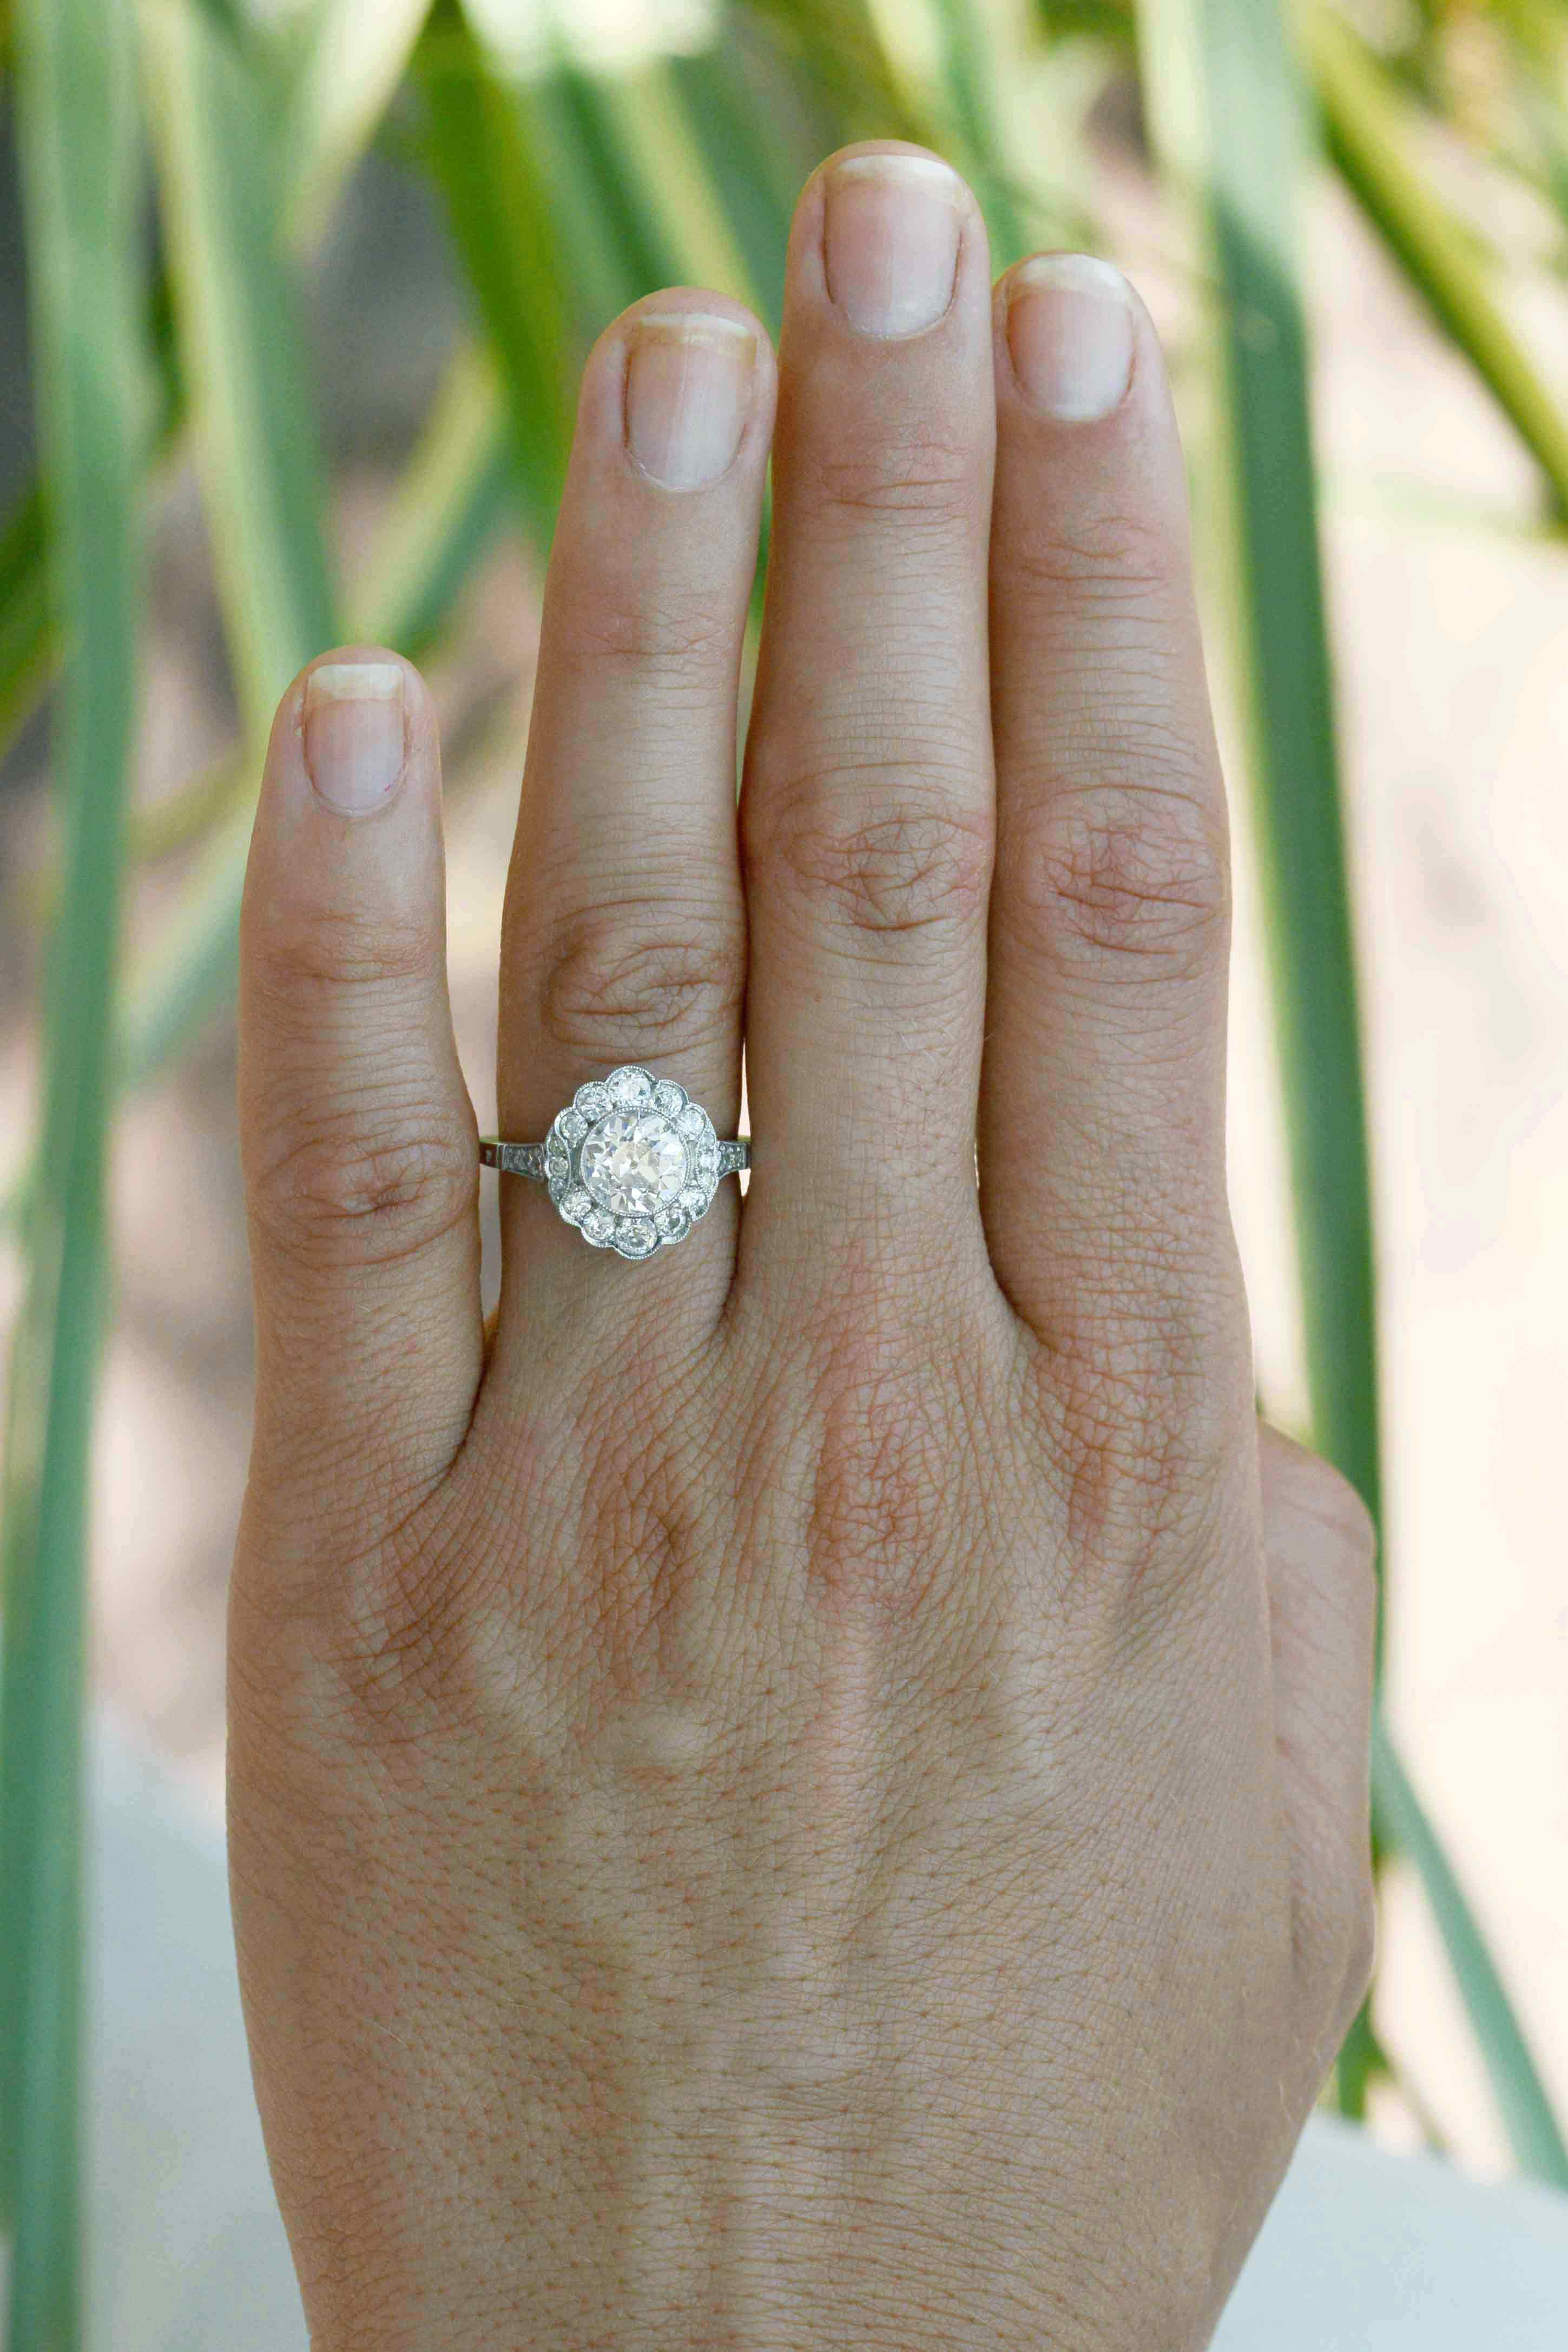 A flower shape diamonds halo engagement ring.